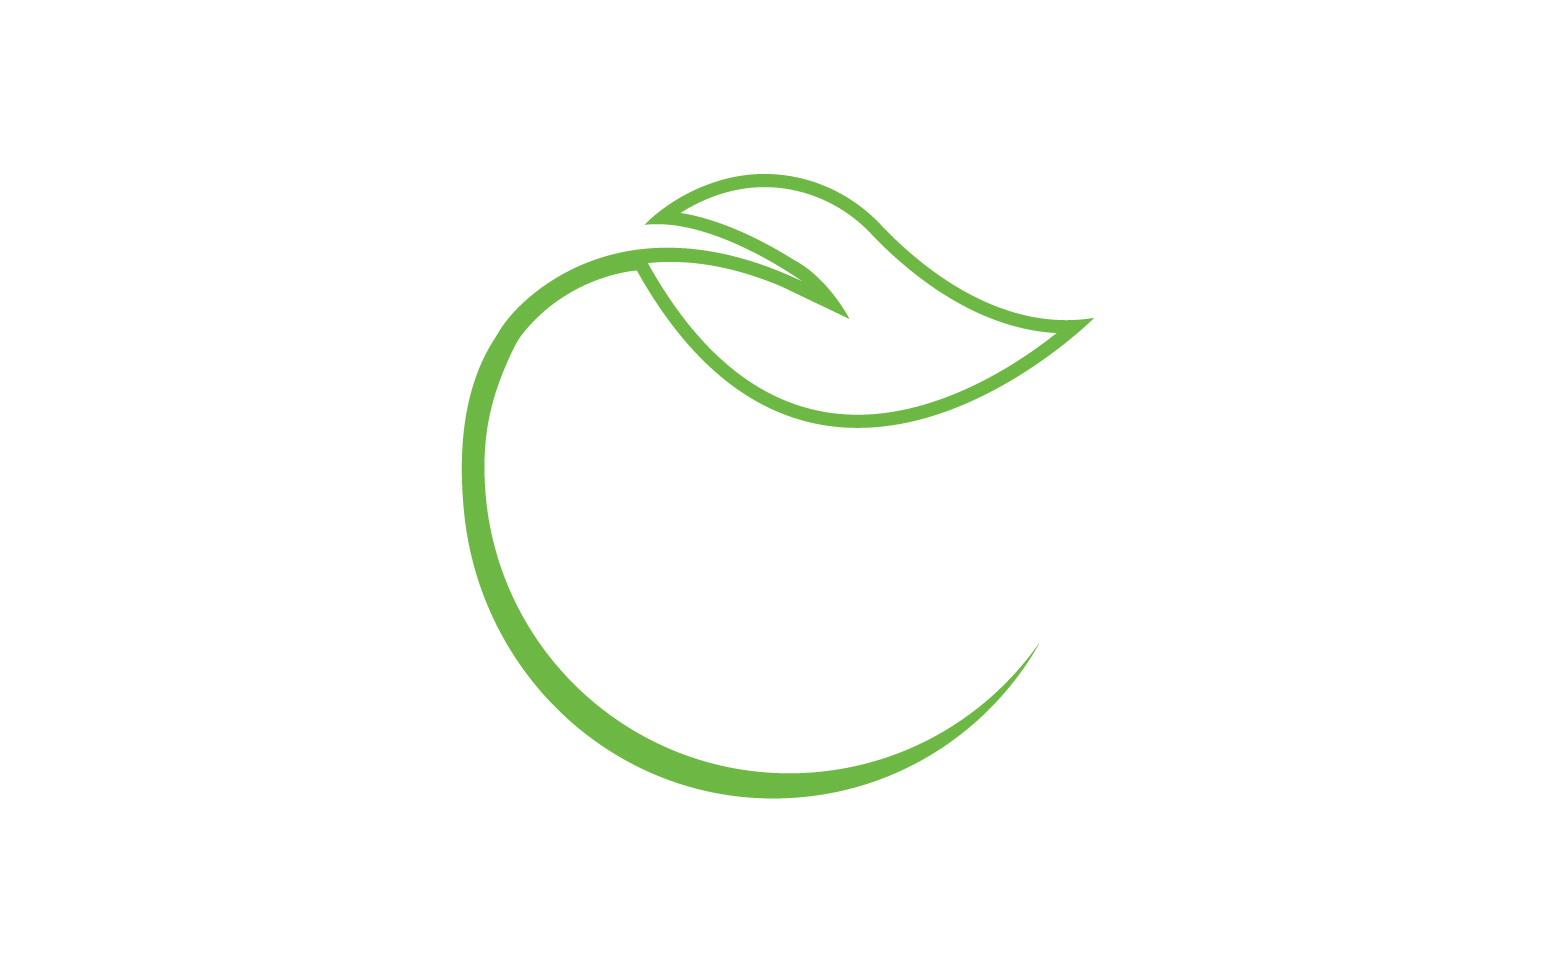 Leaf green ecology tree element icon version v4